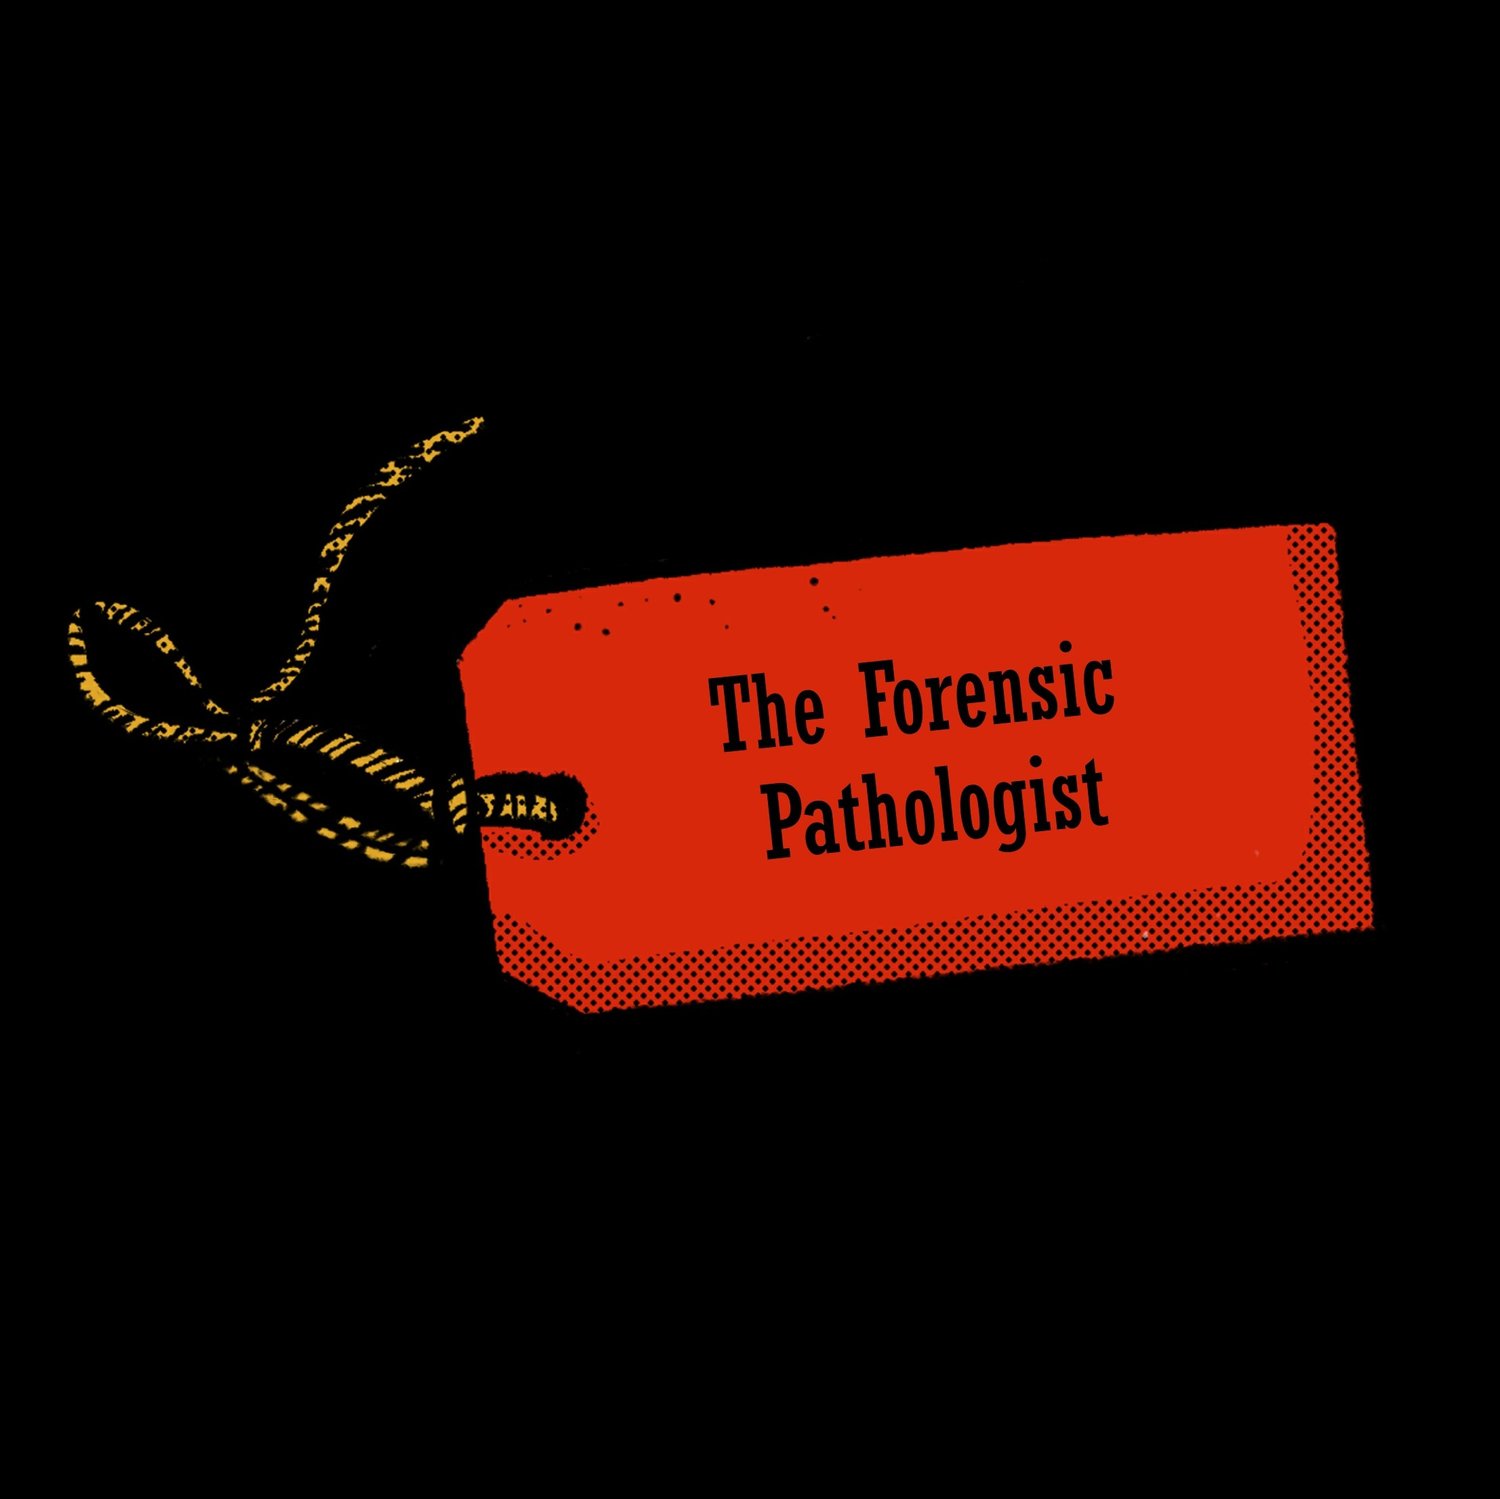 Episode 14: The Forensic Pathologist